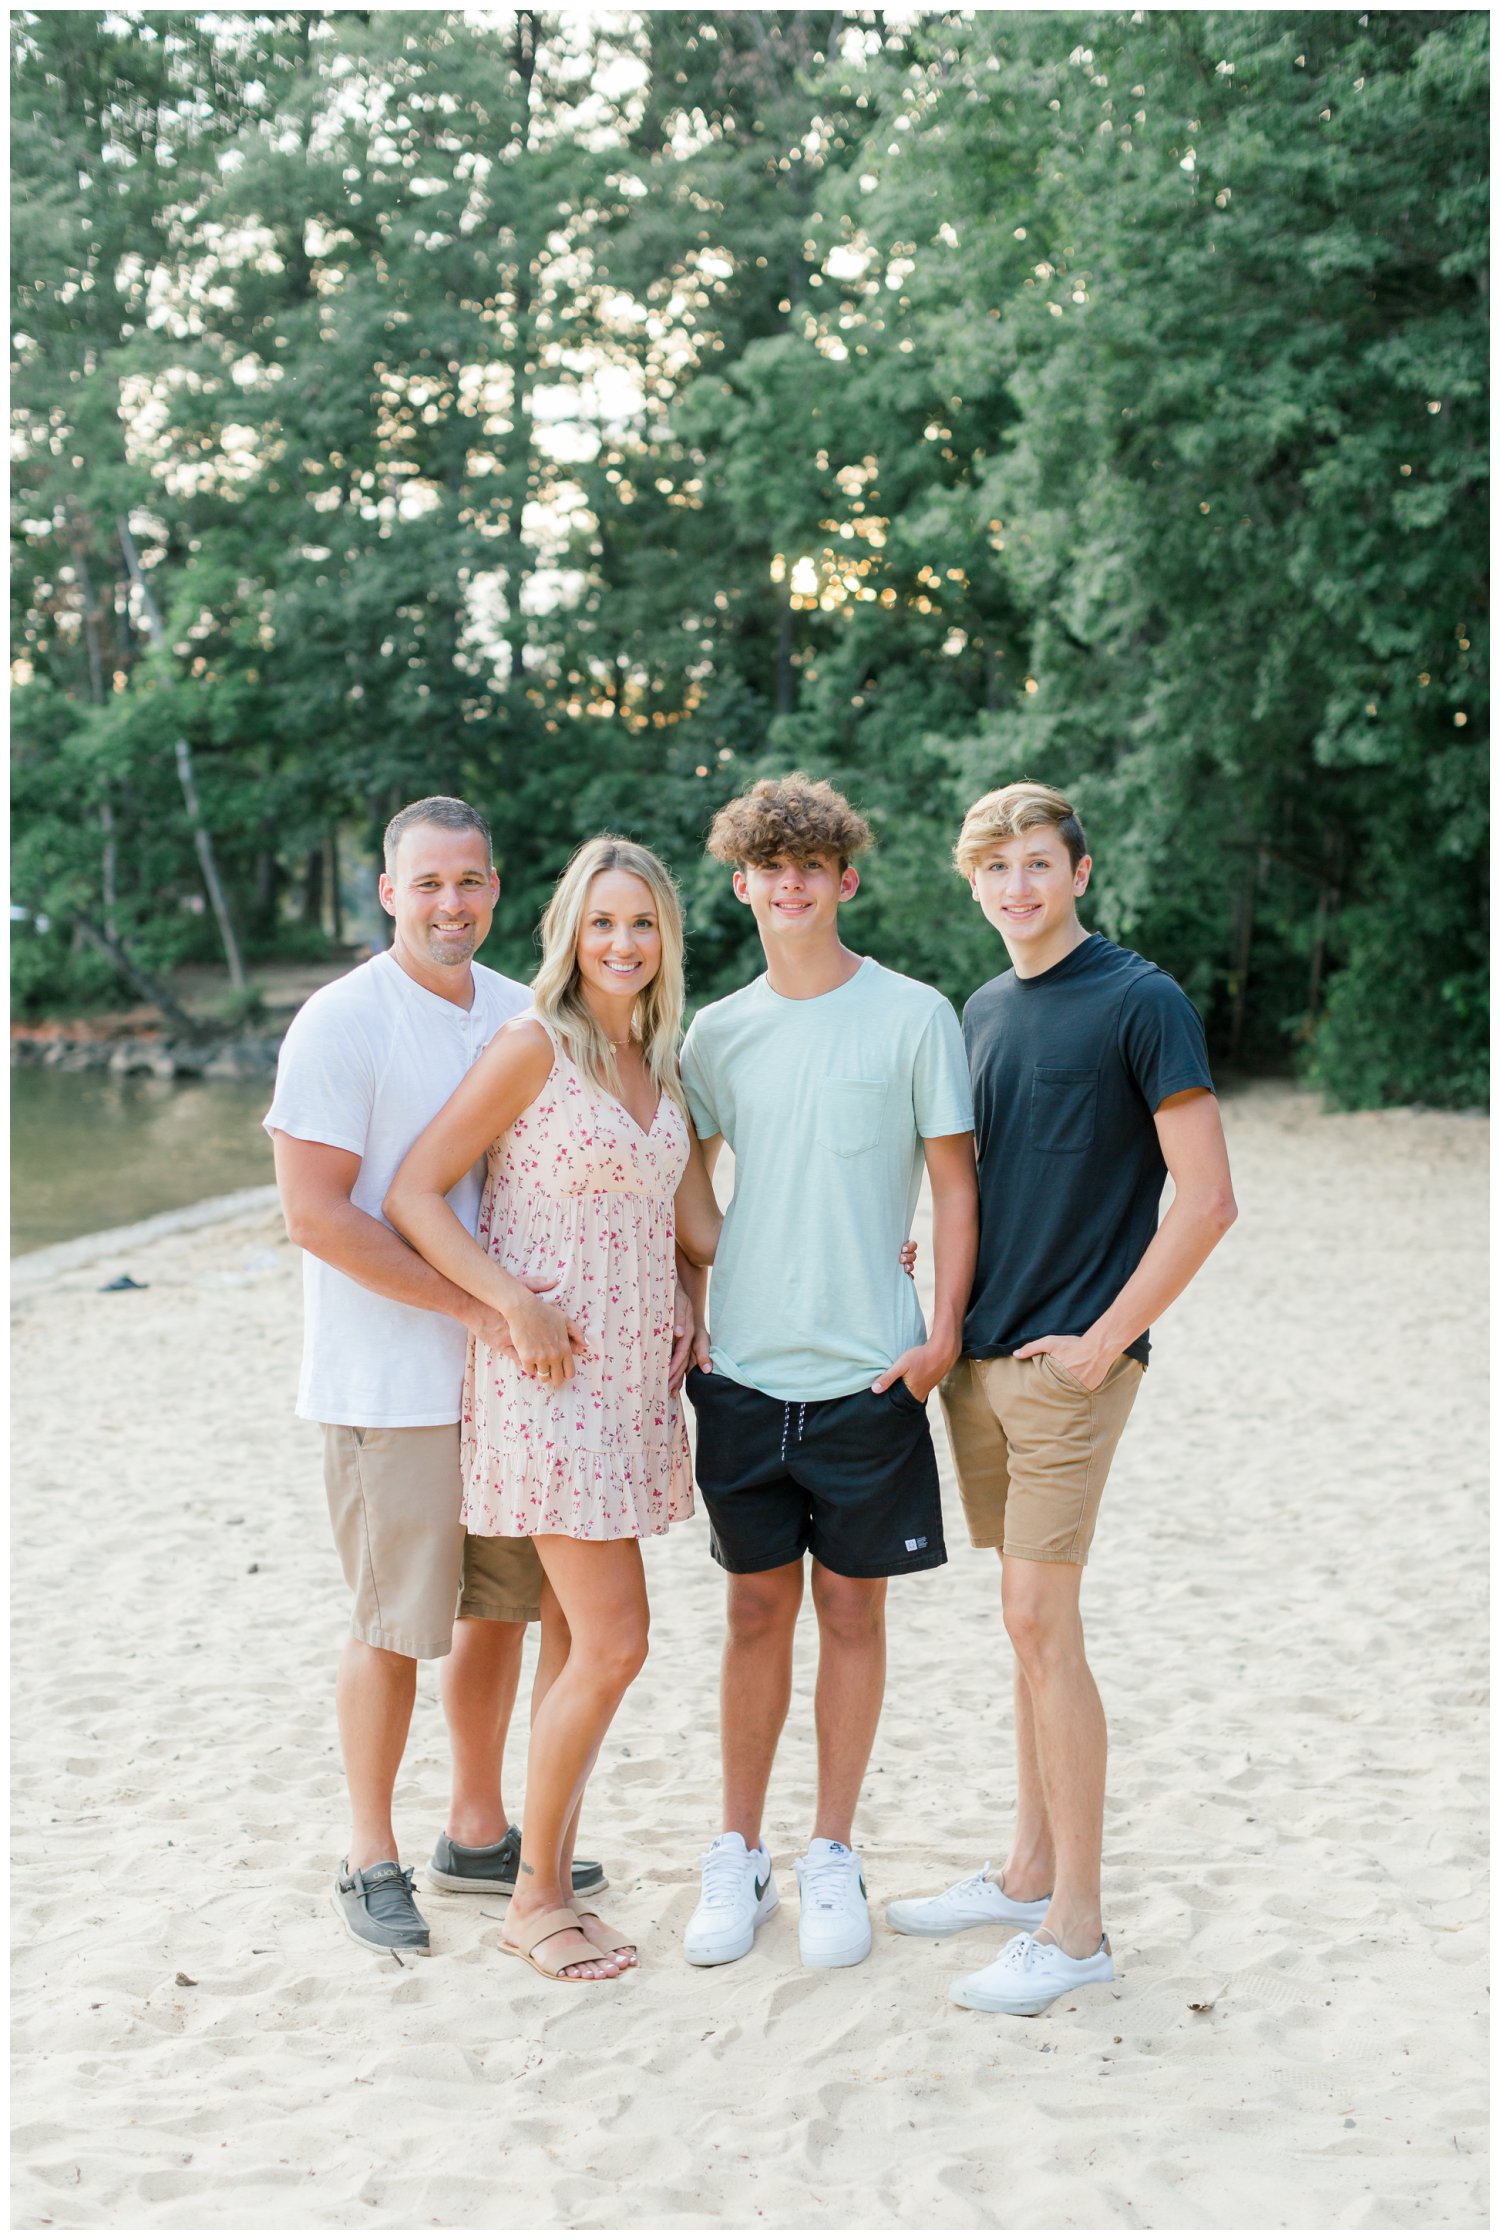 Summertime Jetton Park family photos in Charlotte North Carolina